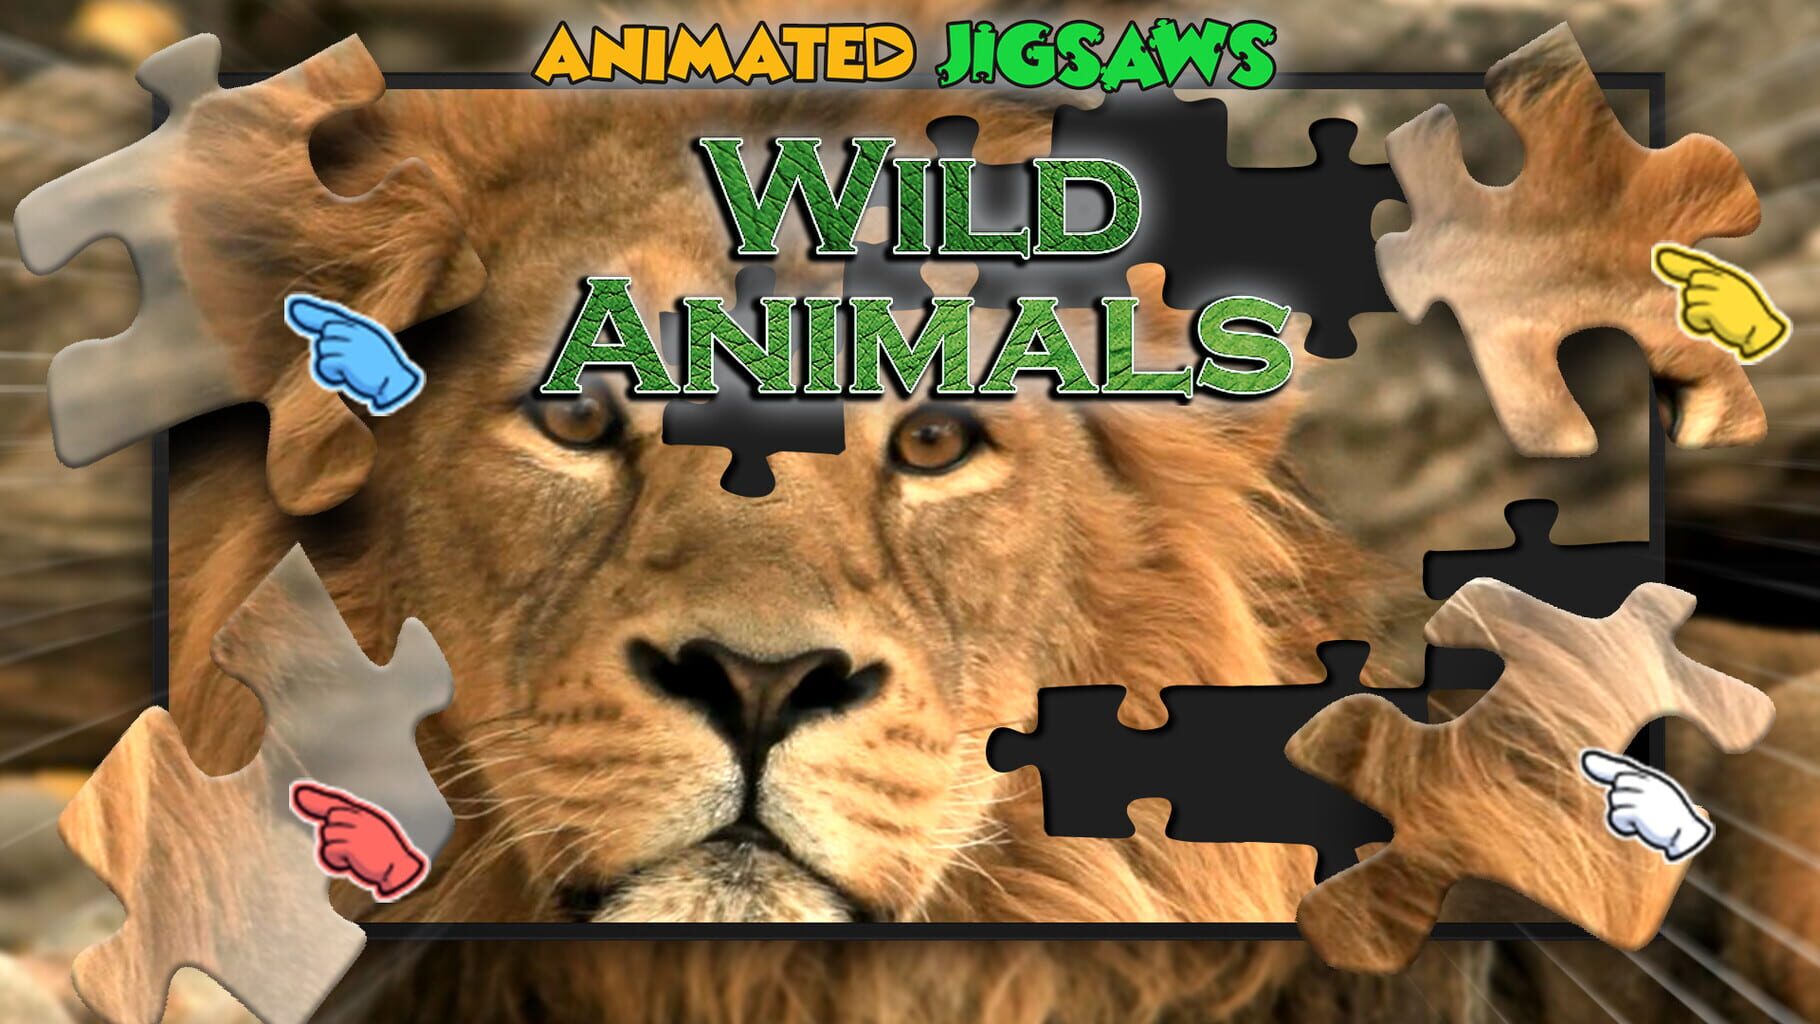 Animated Jigsaws: Wild Animals artwork